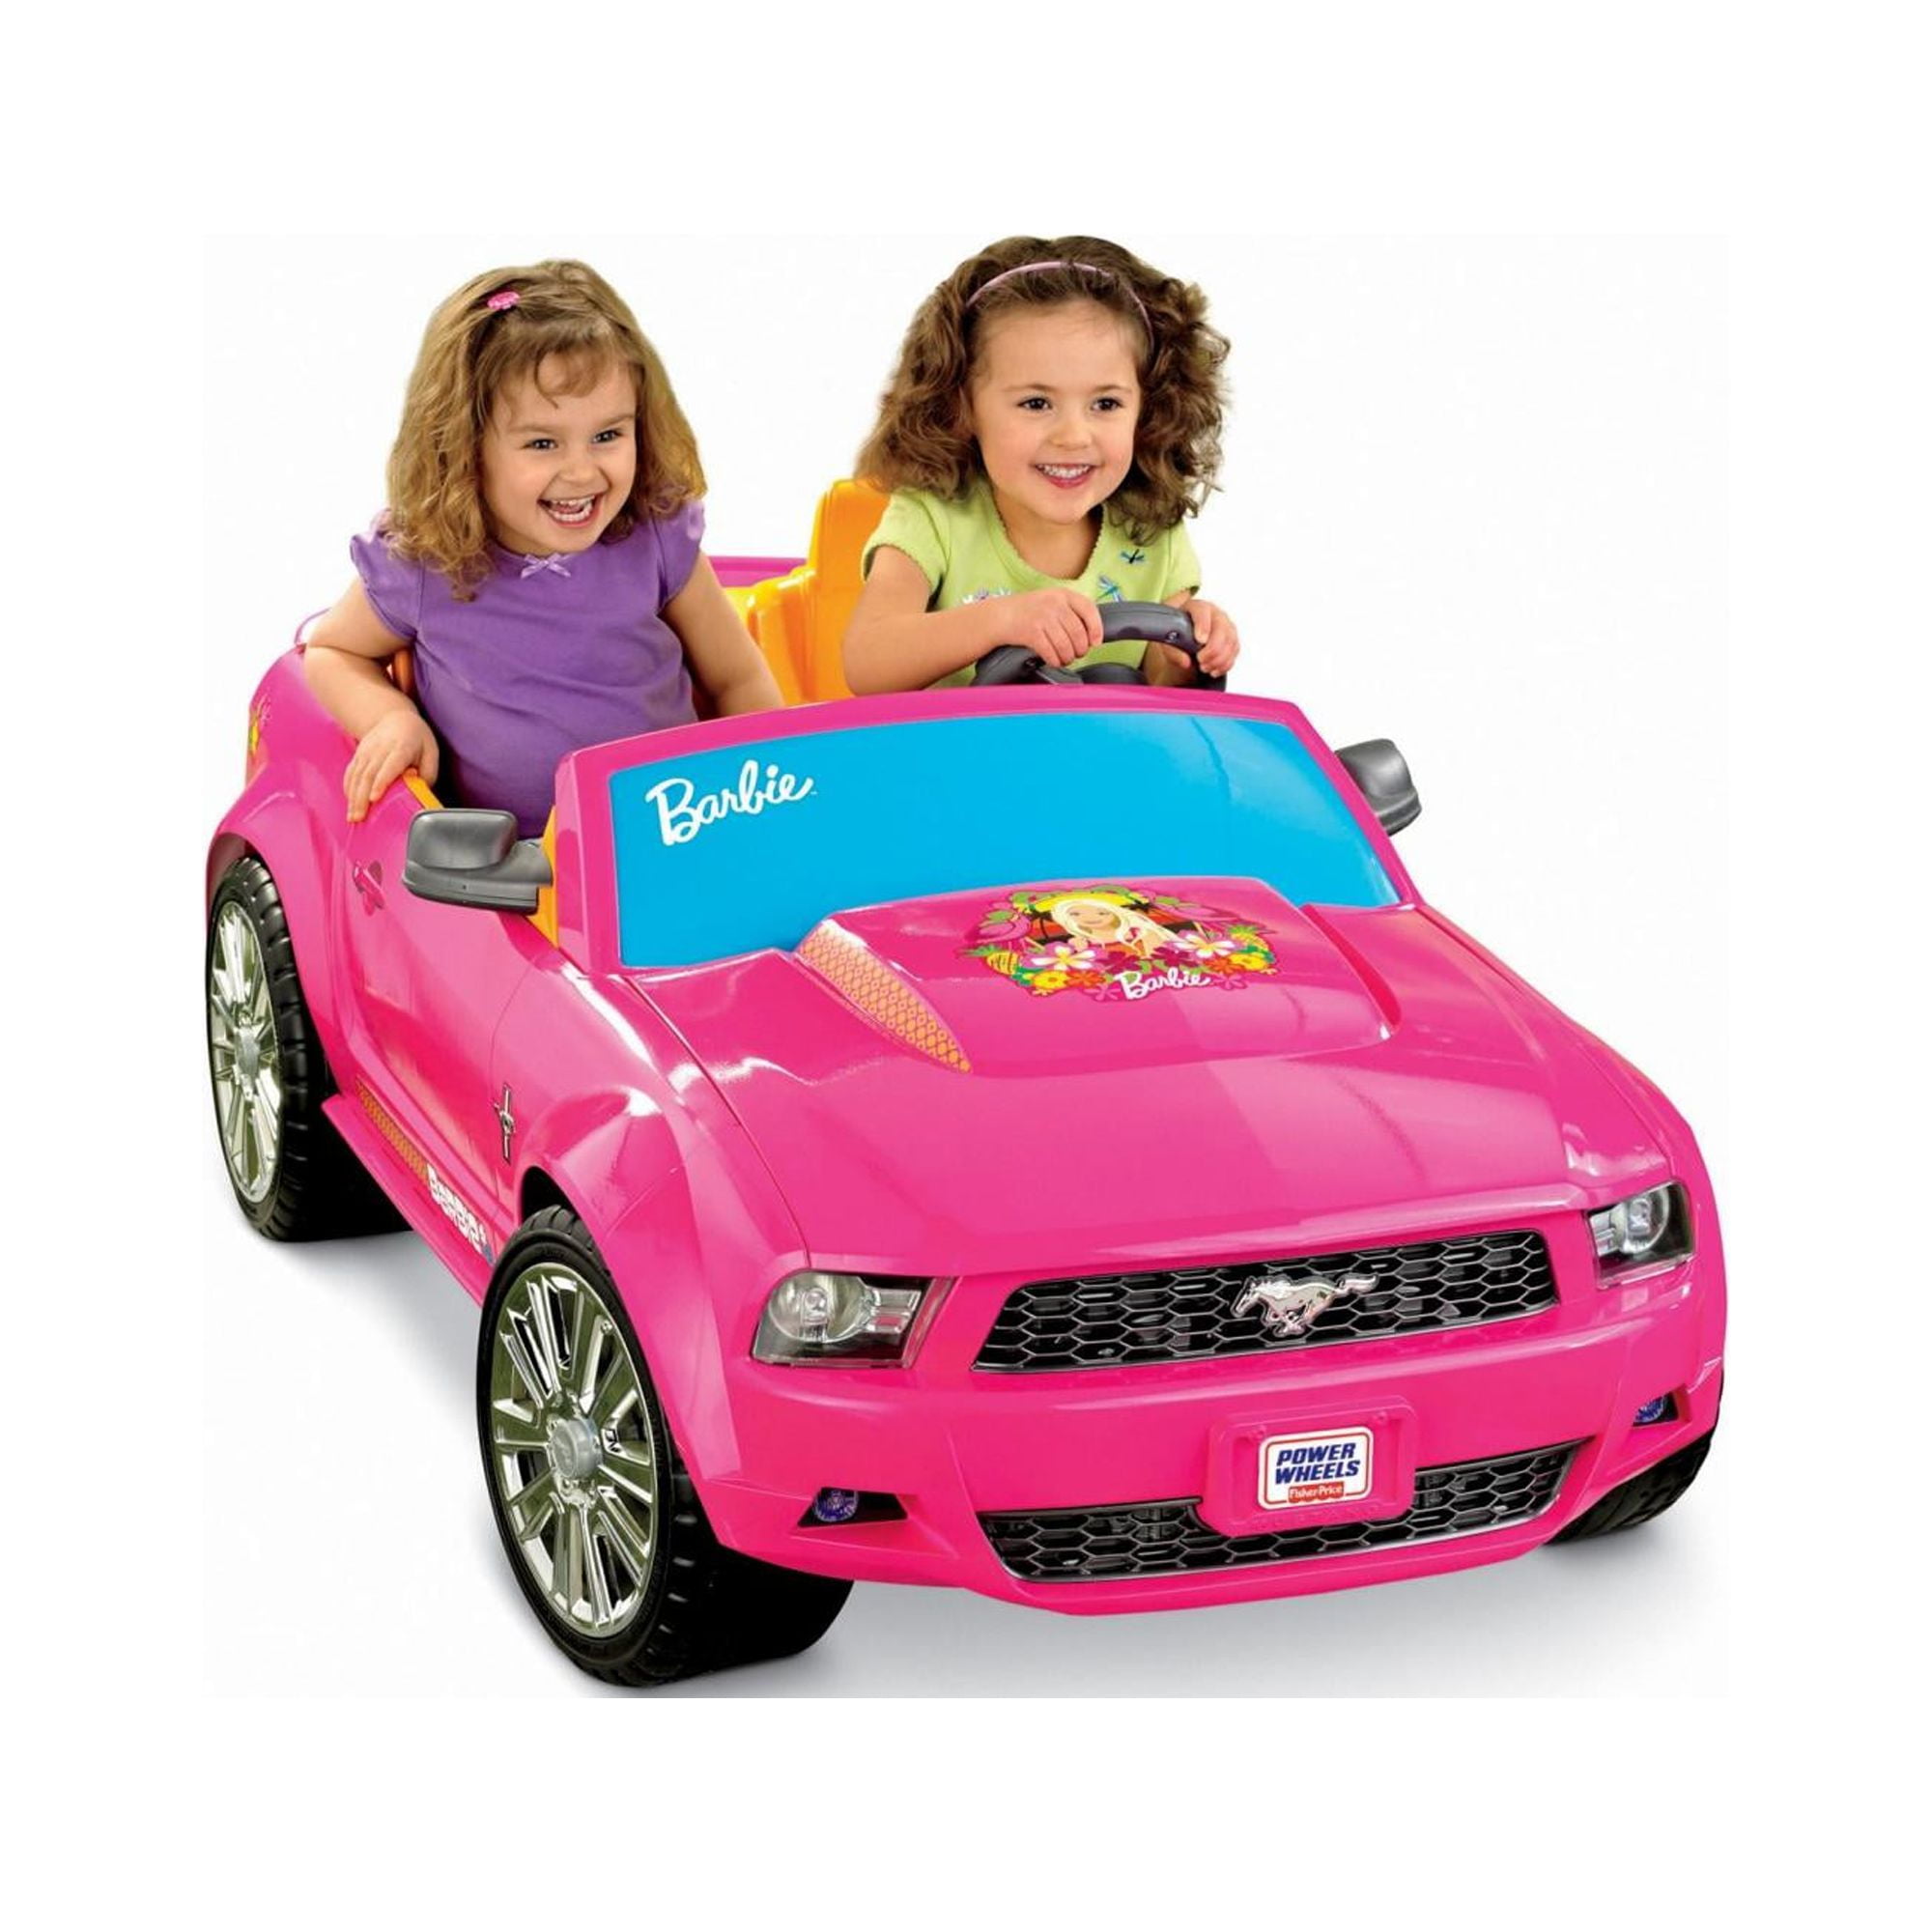 Машина кид. Power Wheels Fisher Price Ford Mustang. Детские машины для девочек. Машины для детей девочек. Машина для детей 11 лет.